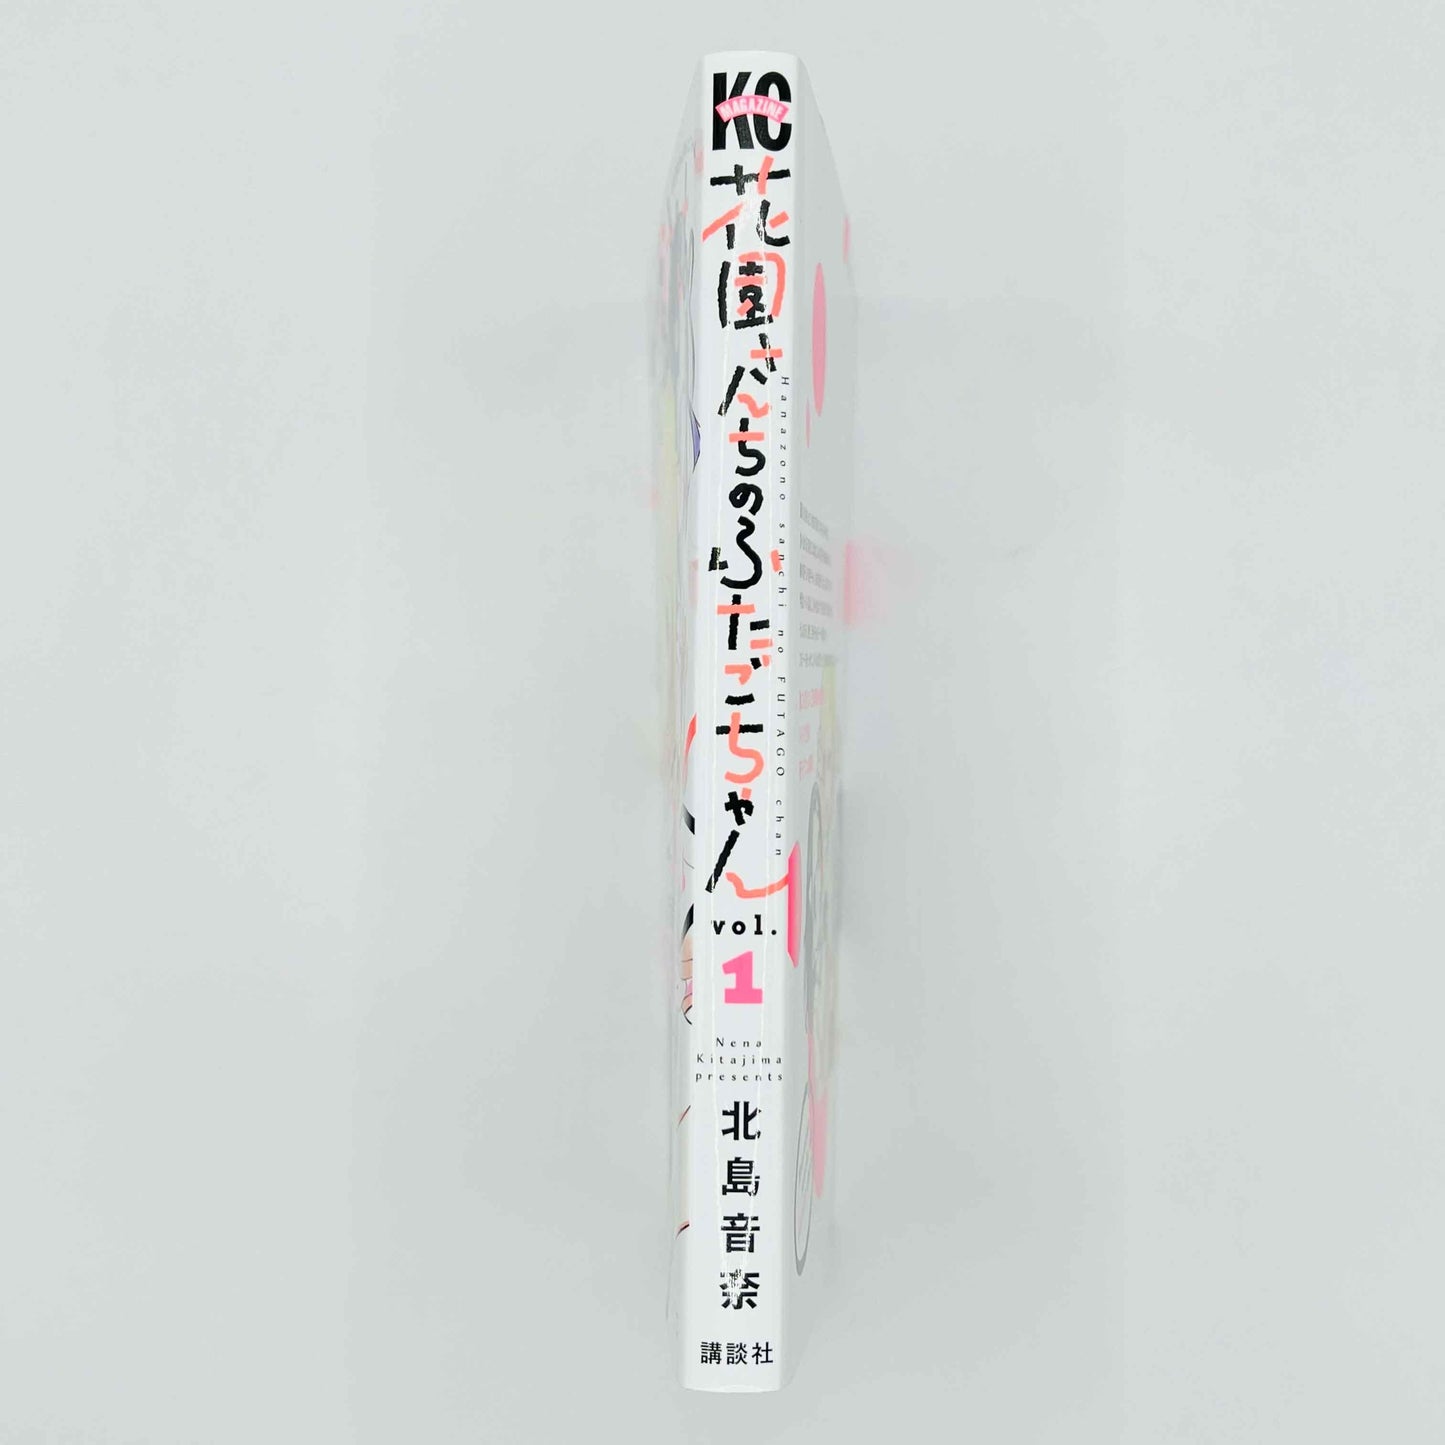 Hanazono-sanchi no Futago-chan - Volume 01 - 1stPrint.net - 1st First Print Edition Manga Store - M-HNZNFTG-01-001